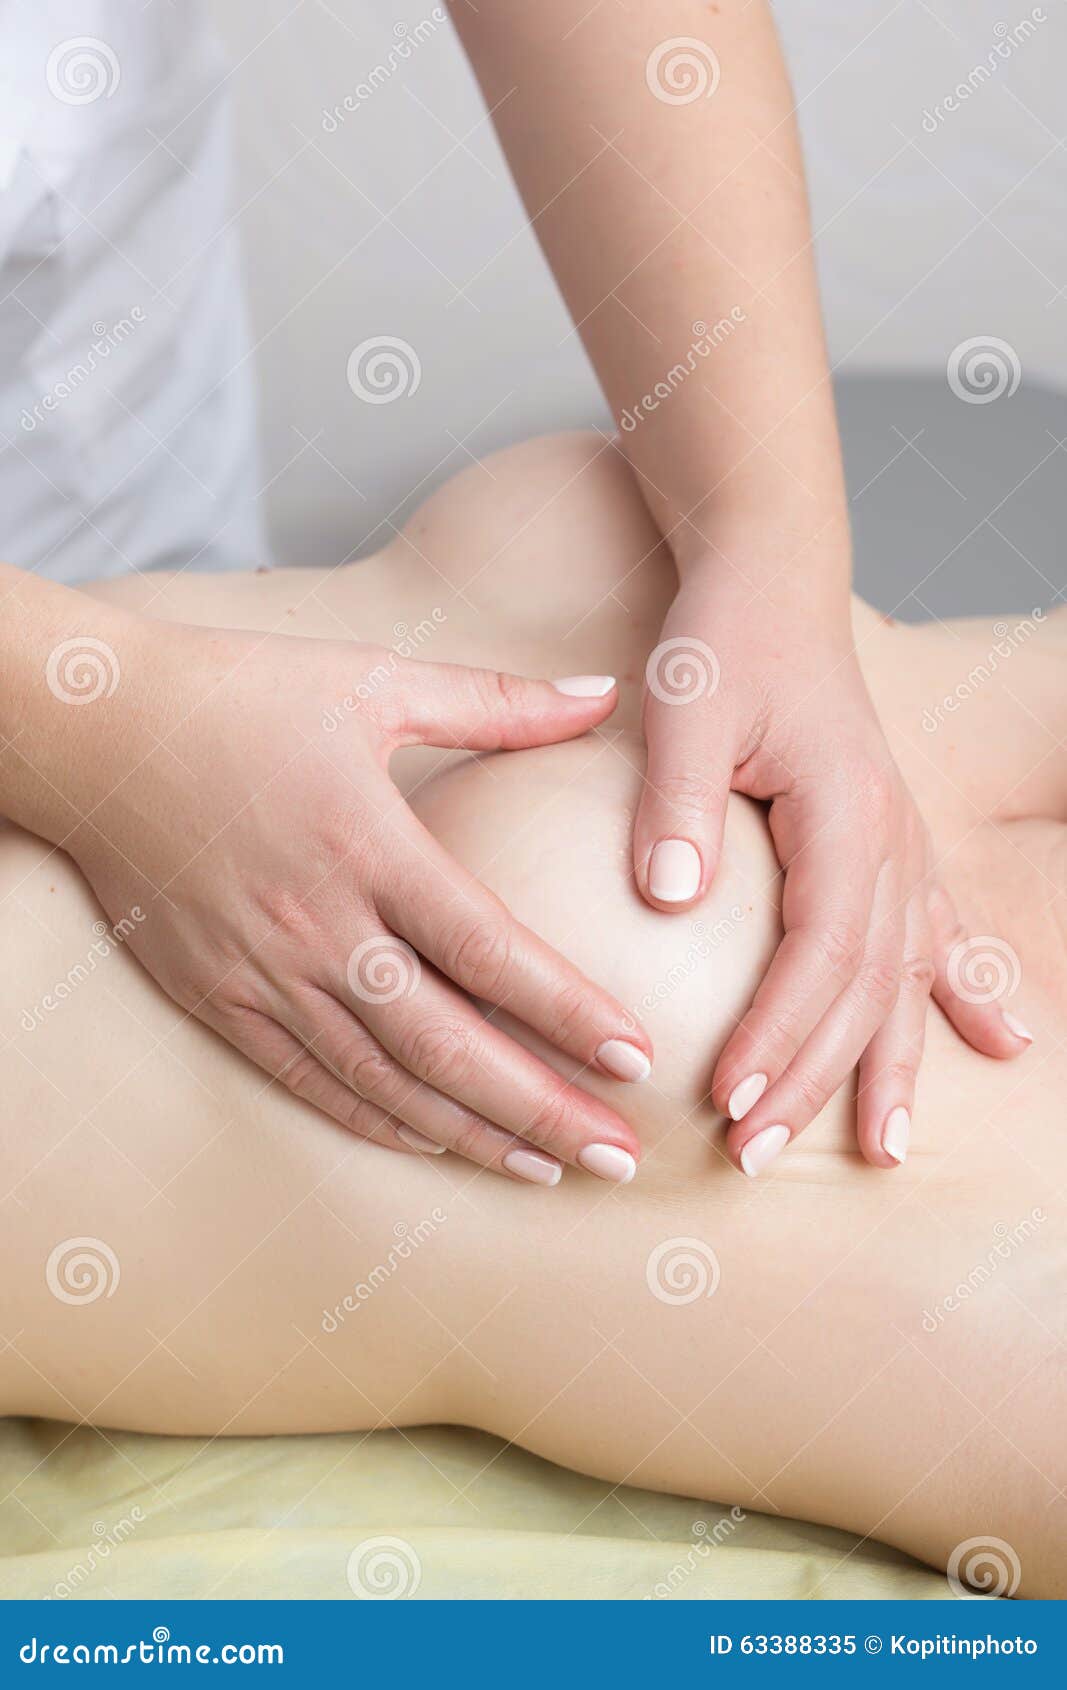 массаж парня грудью фото 93